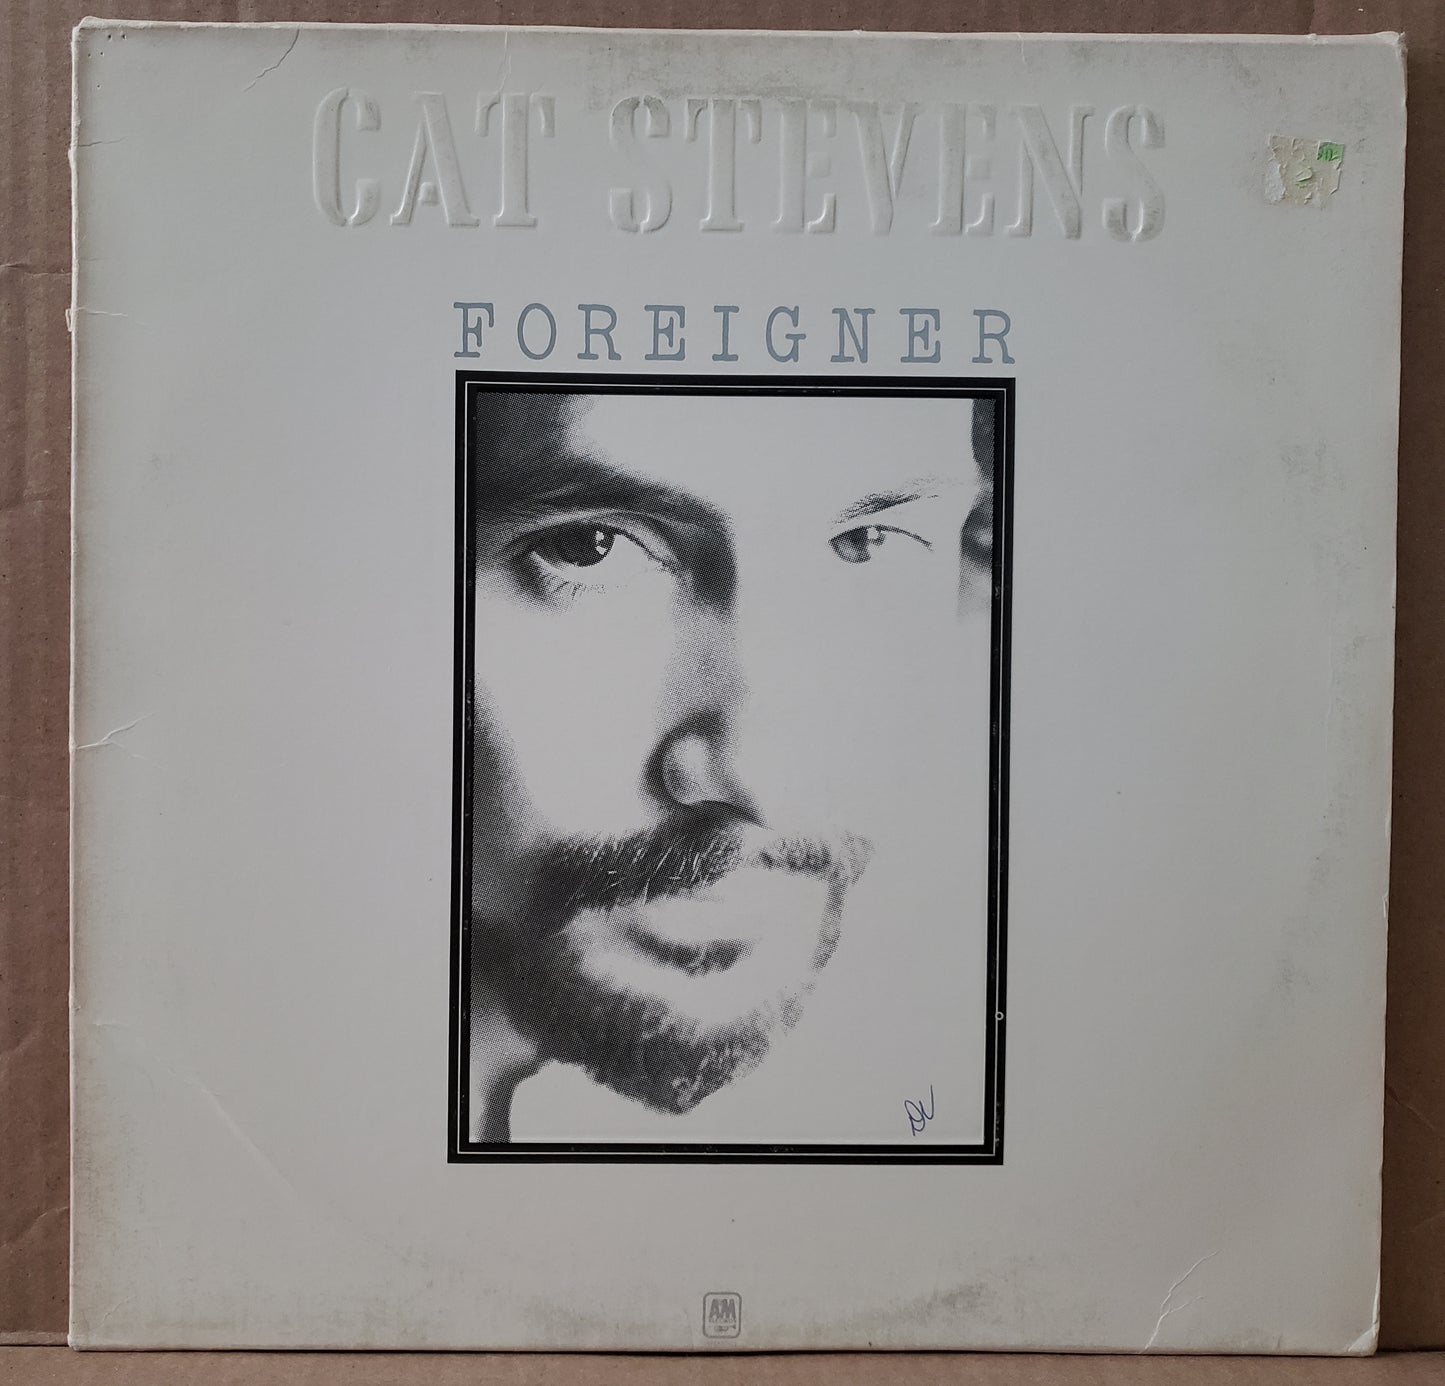 Cat Stevens - Foreigner [1973 Monarch Pressing] [Used Vinyl Record LP]